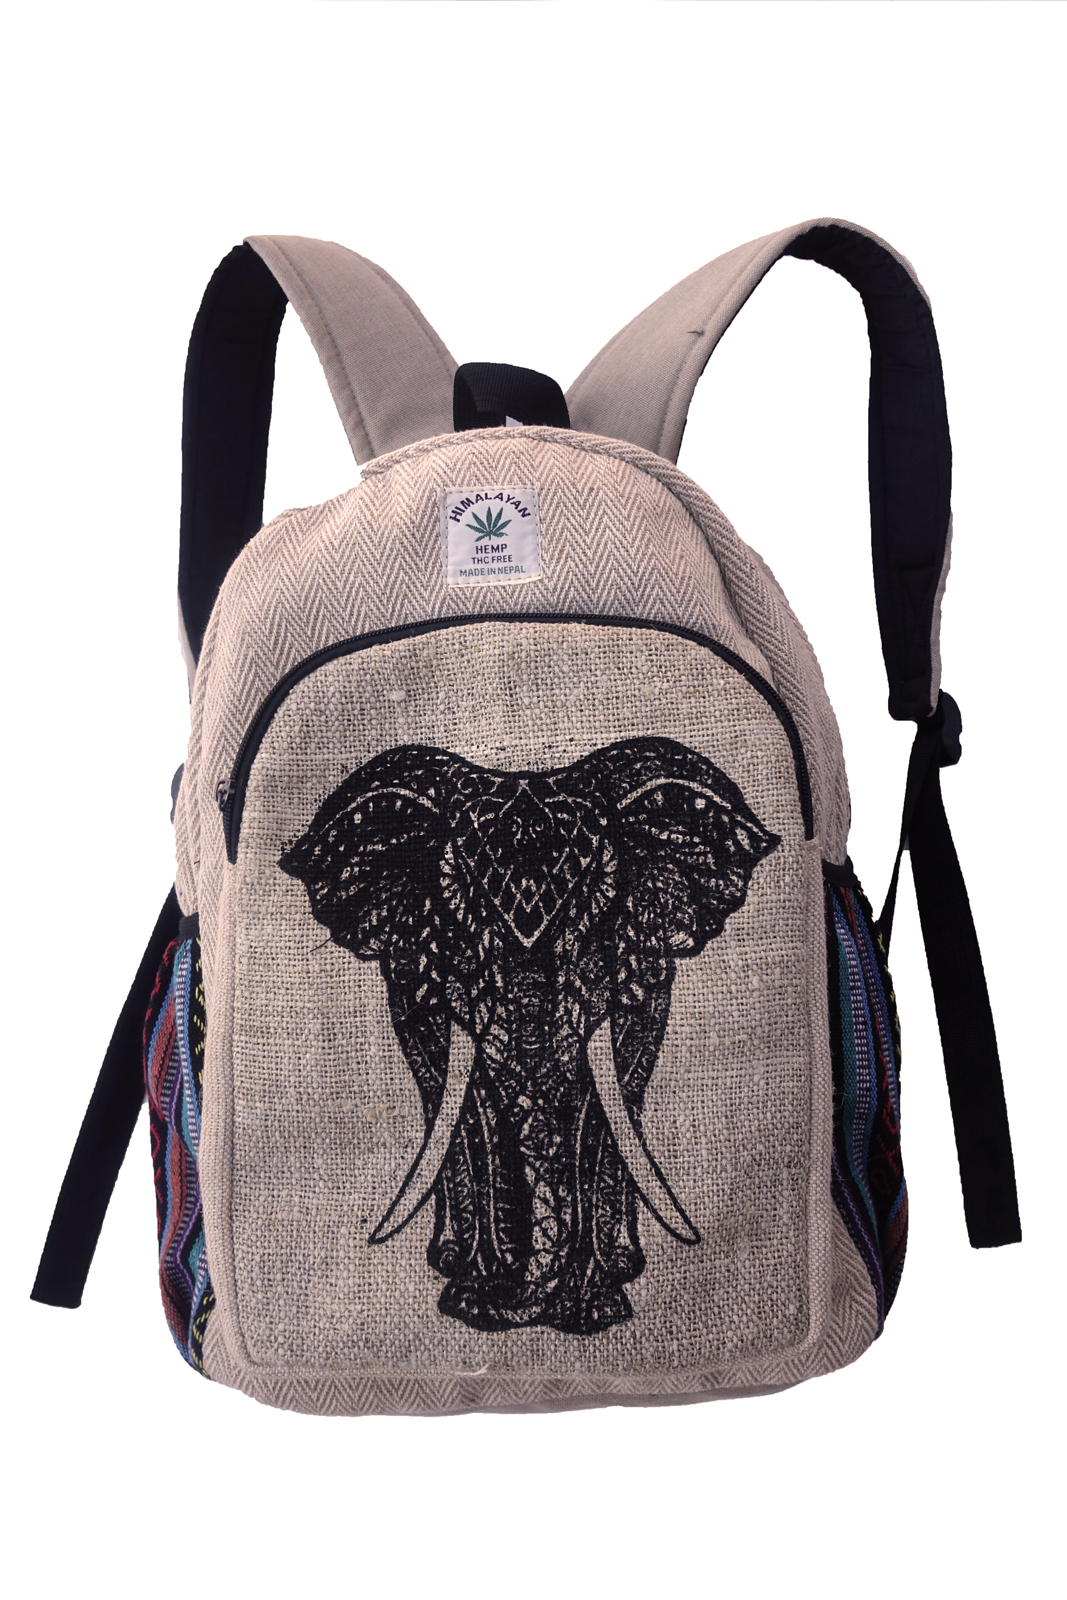 Hemp Elephant Backpack Wholesale (KSE20331)